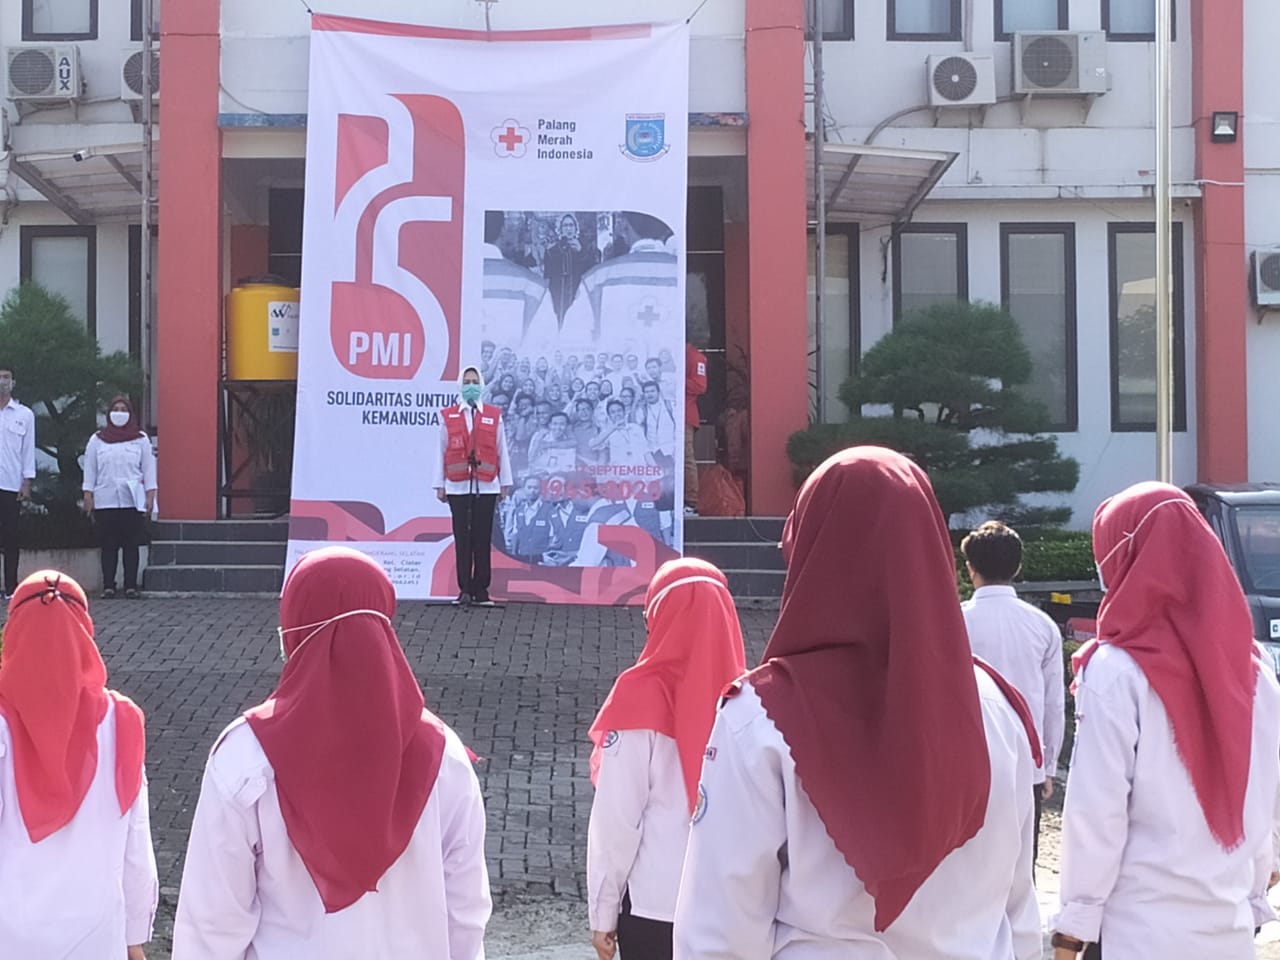 Wali Kota Tangsel Airin Rachmi Diany memimpin upacara perayaan Hari Ulang Tahun (HUT) ke-75 bersama petugas Palang Merah Indonesia (PMI) Cabang Kota Tangerang Selatan.